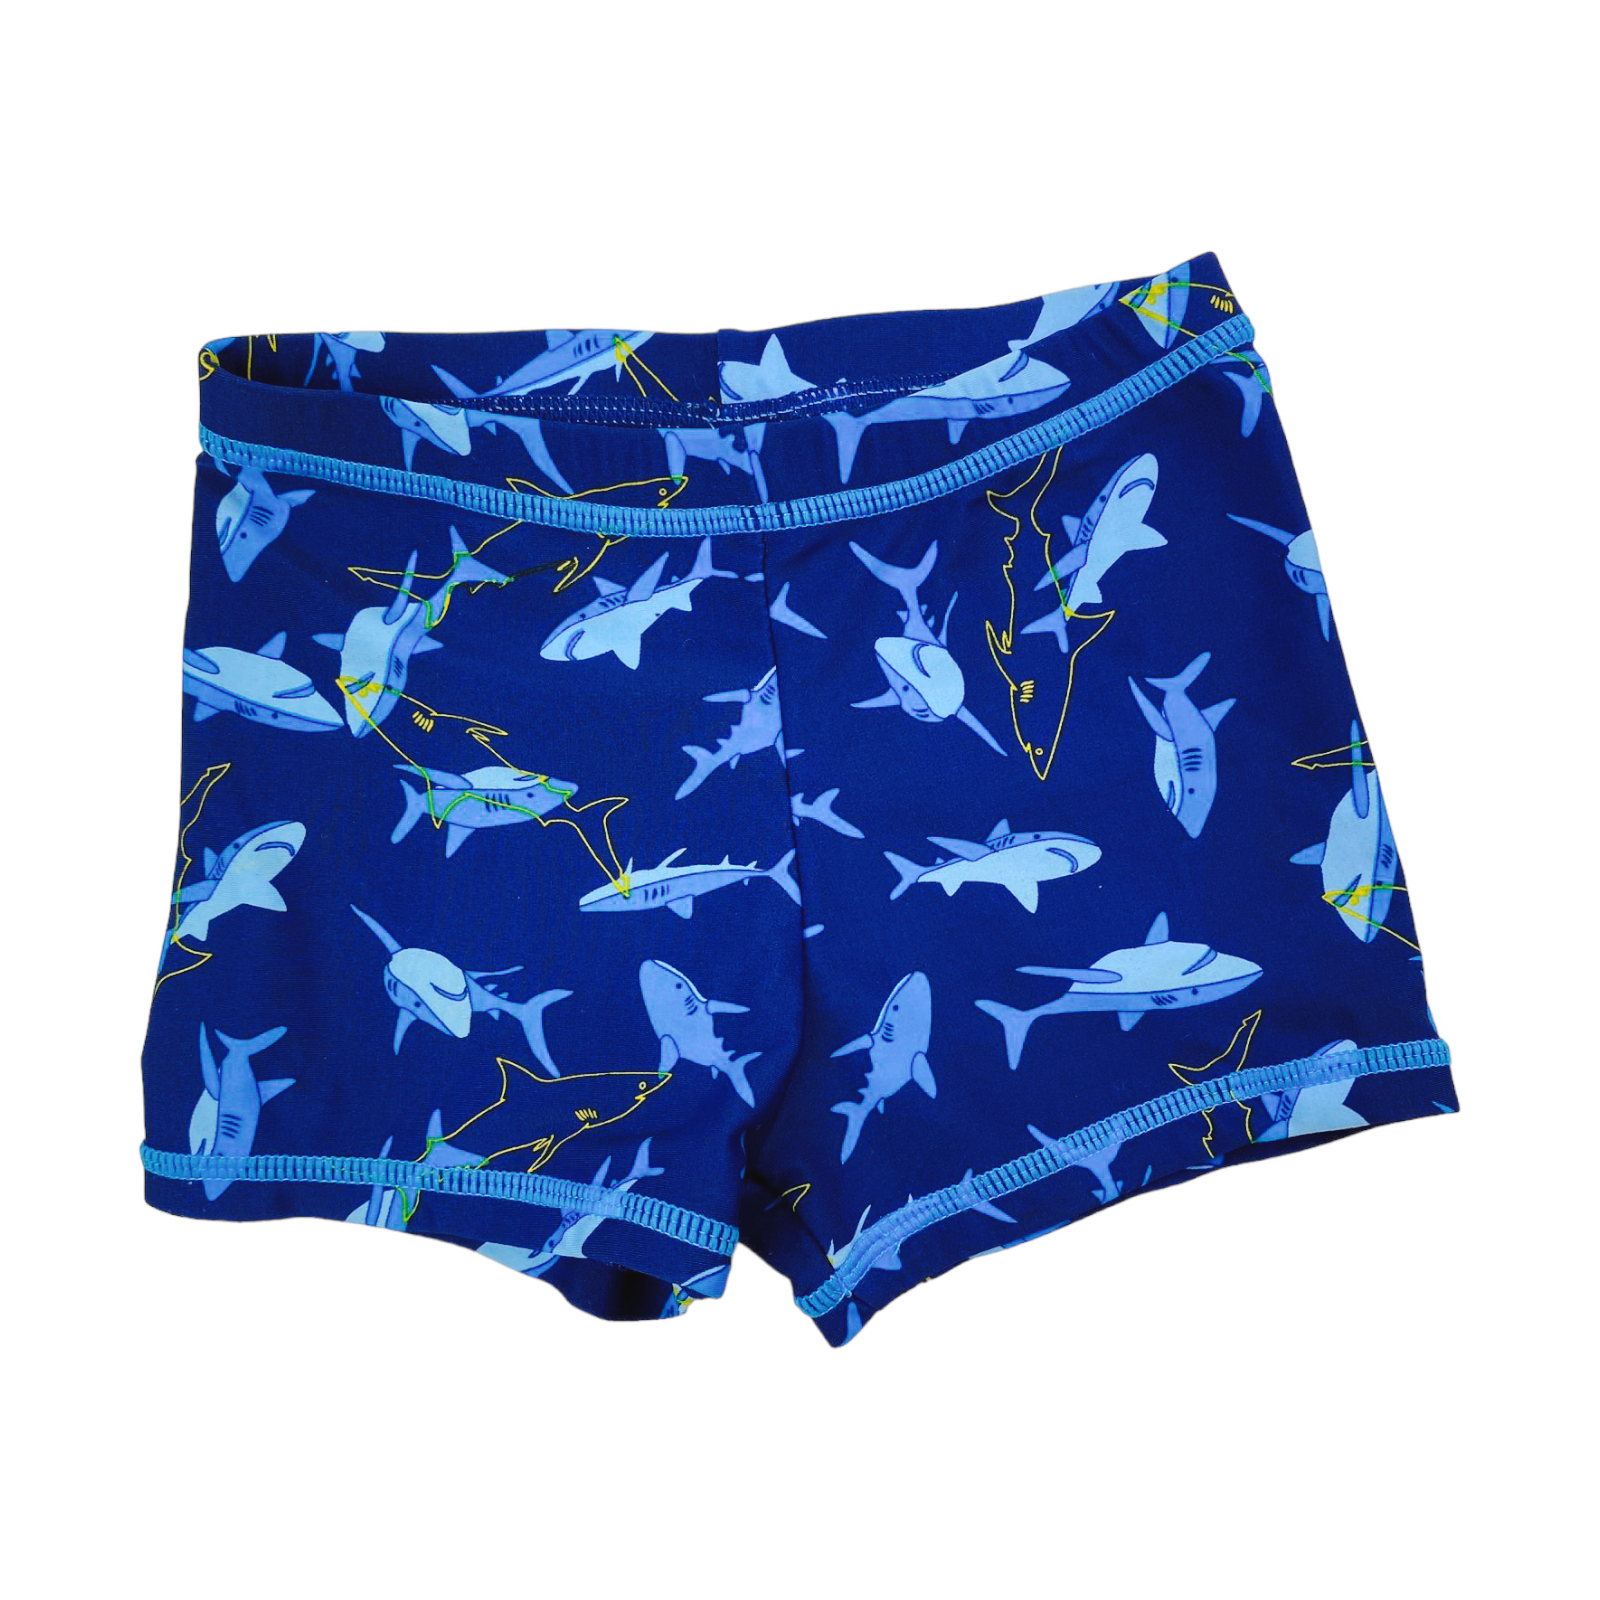 Short de baño azul con tiburones